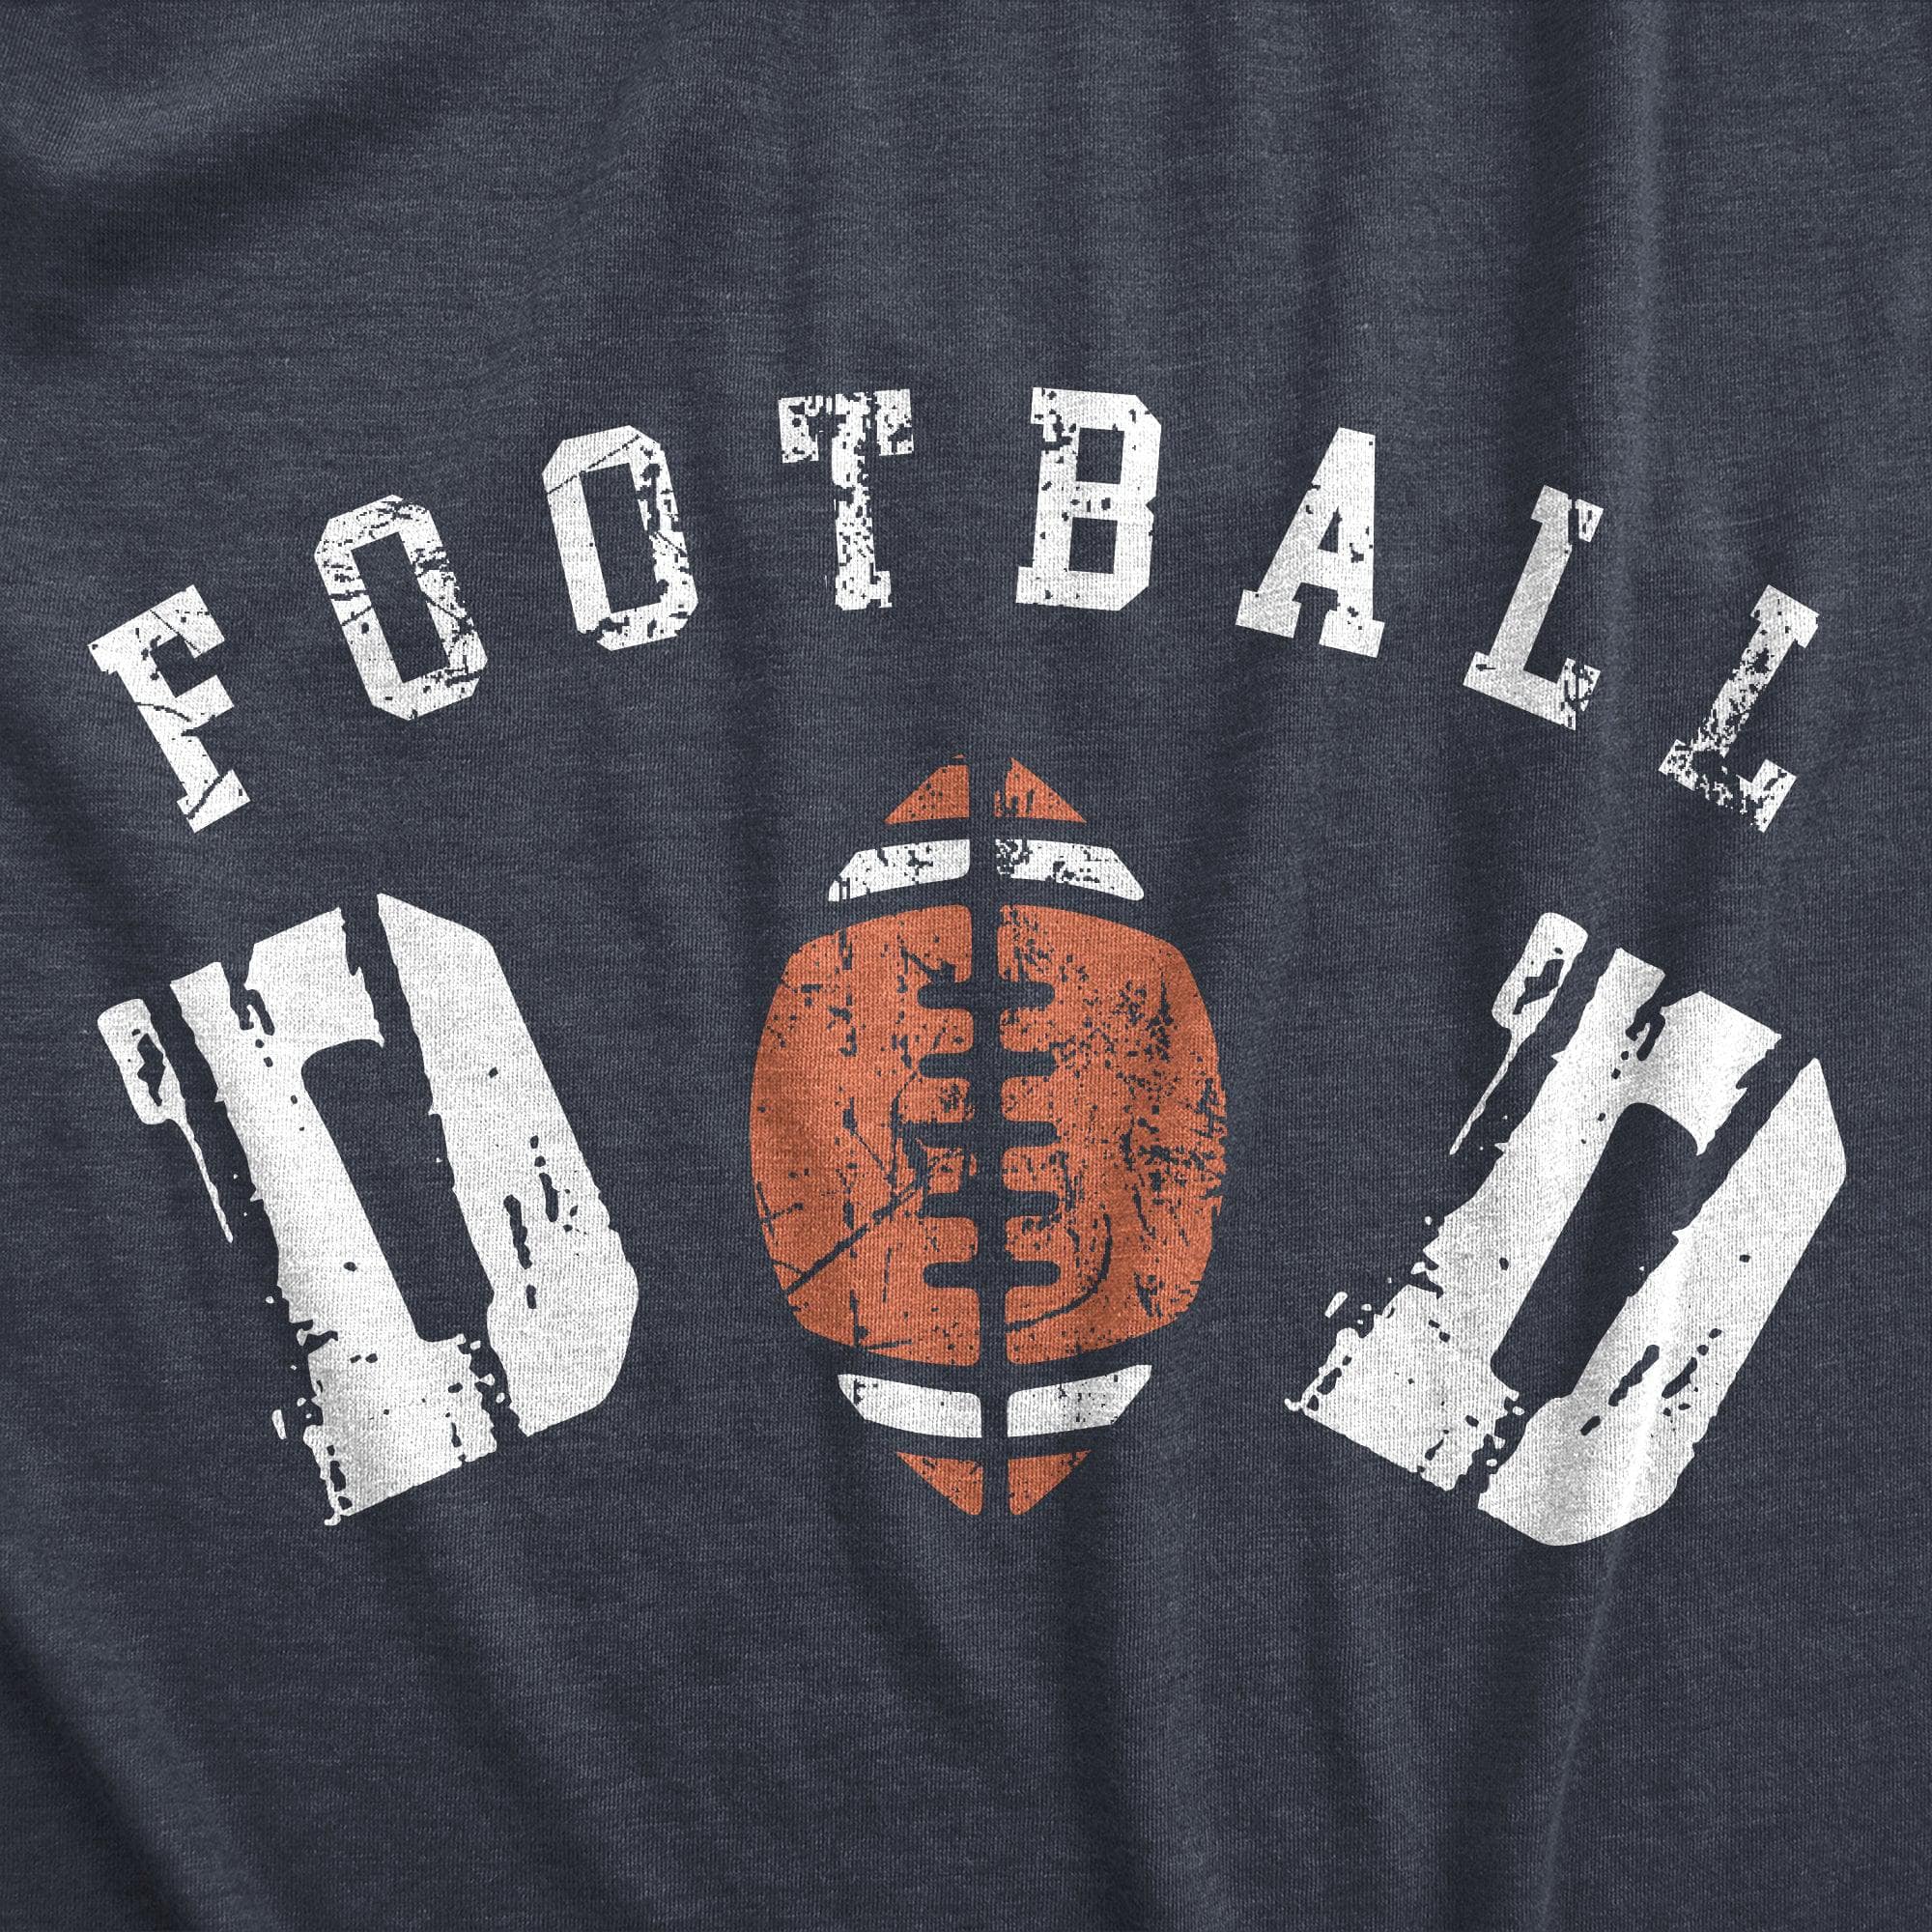 Football Dad Men's Tshirt  -  Crazy Dog T-Shirts